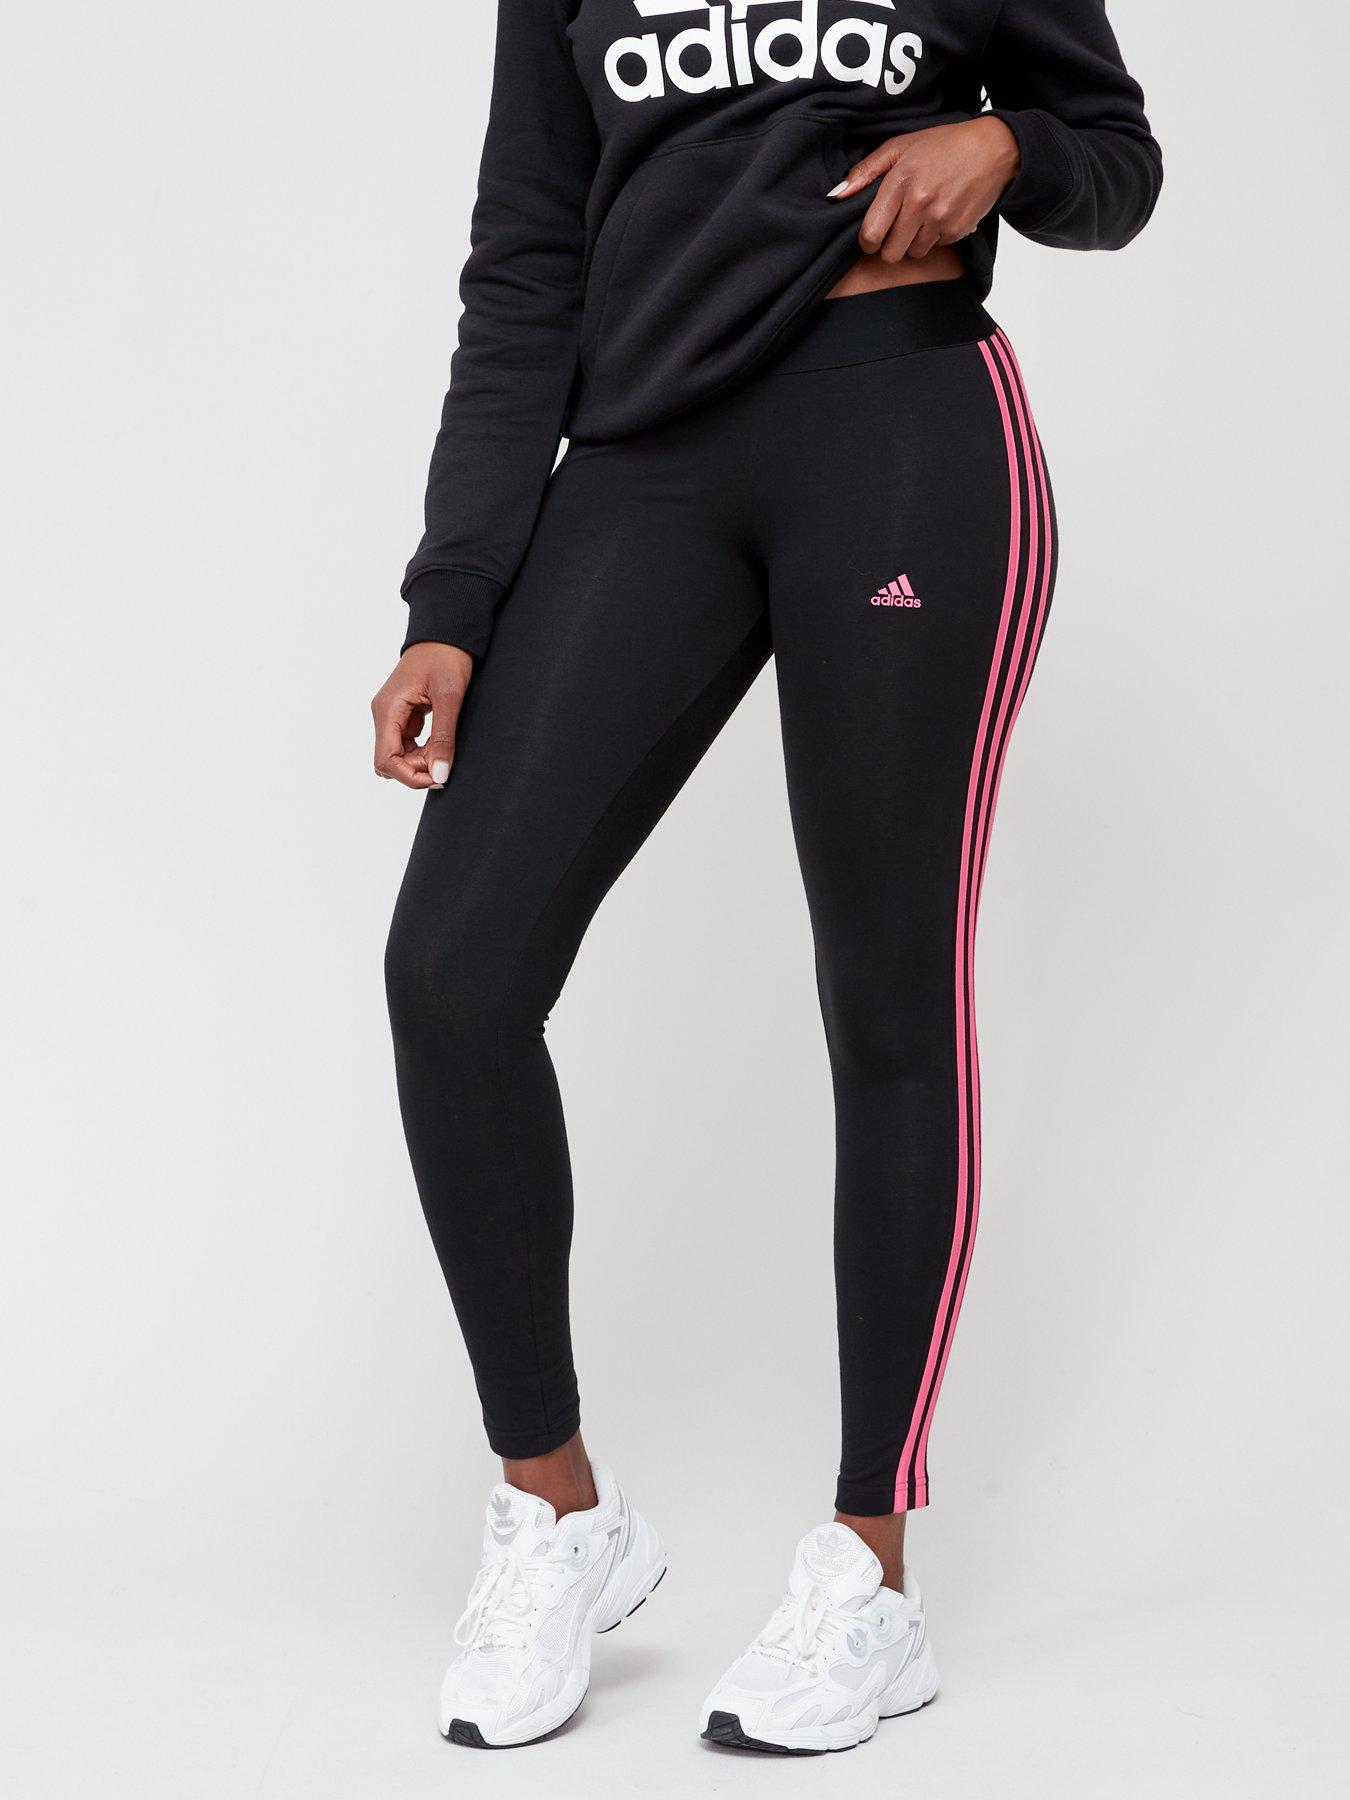 https://media.very.co.uk/i/very/V3LAC_SQ1_0000000156_BLACK_PINK_MDf/adidas-sportswear-womens-3-stripe-leggings-blackpink.jpg?$180x240_retinamobilex2$